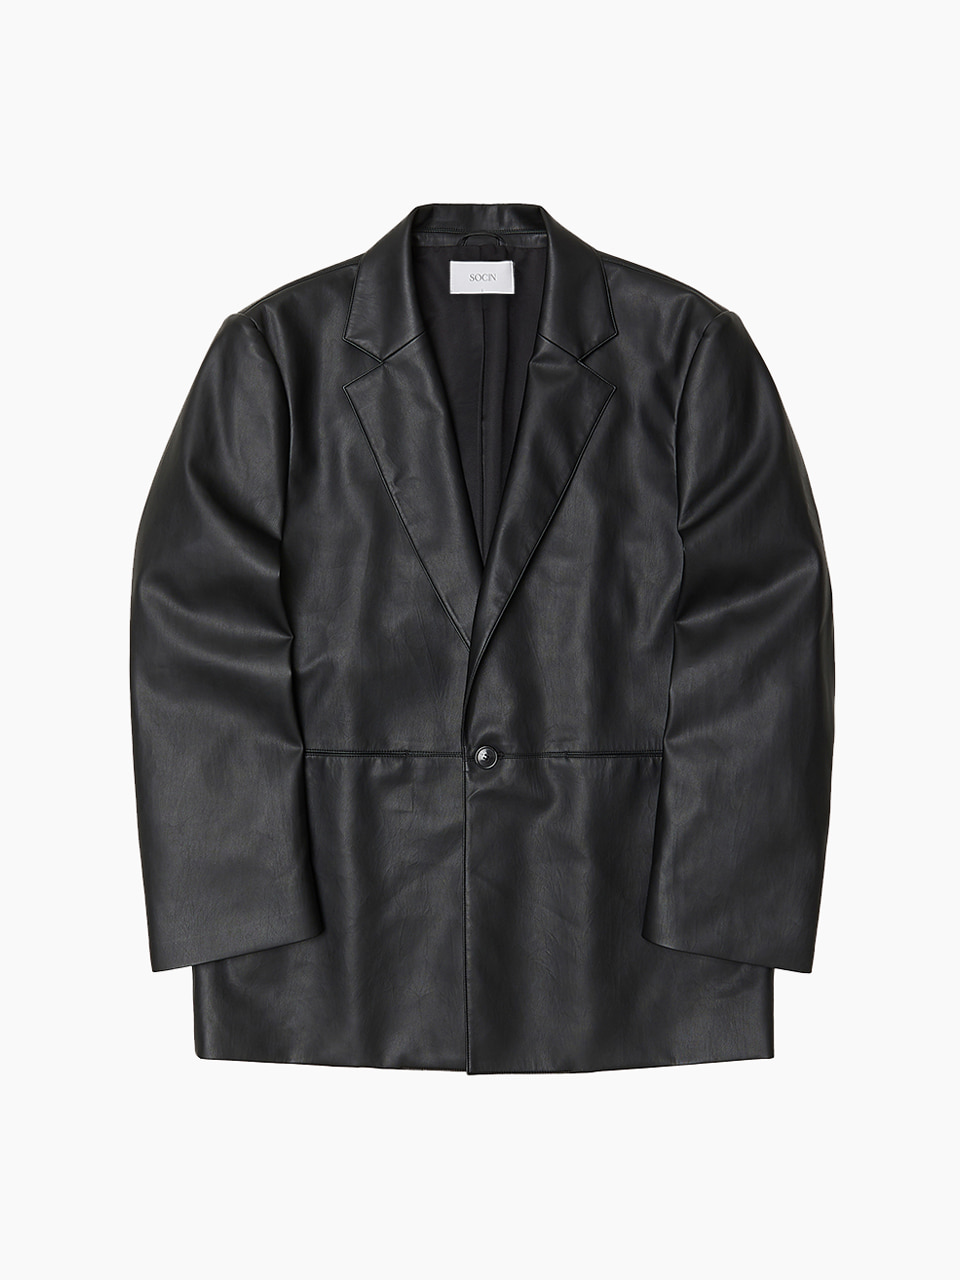 Vegan Leather Single Jacket (Black)